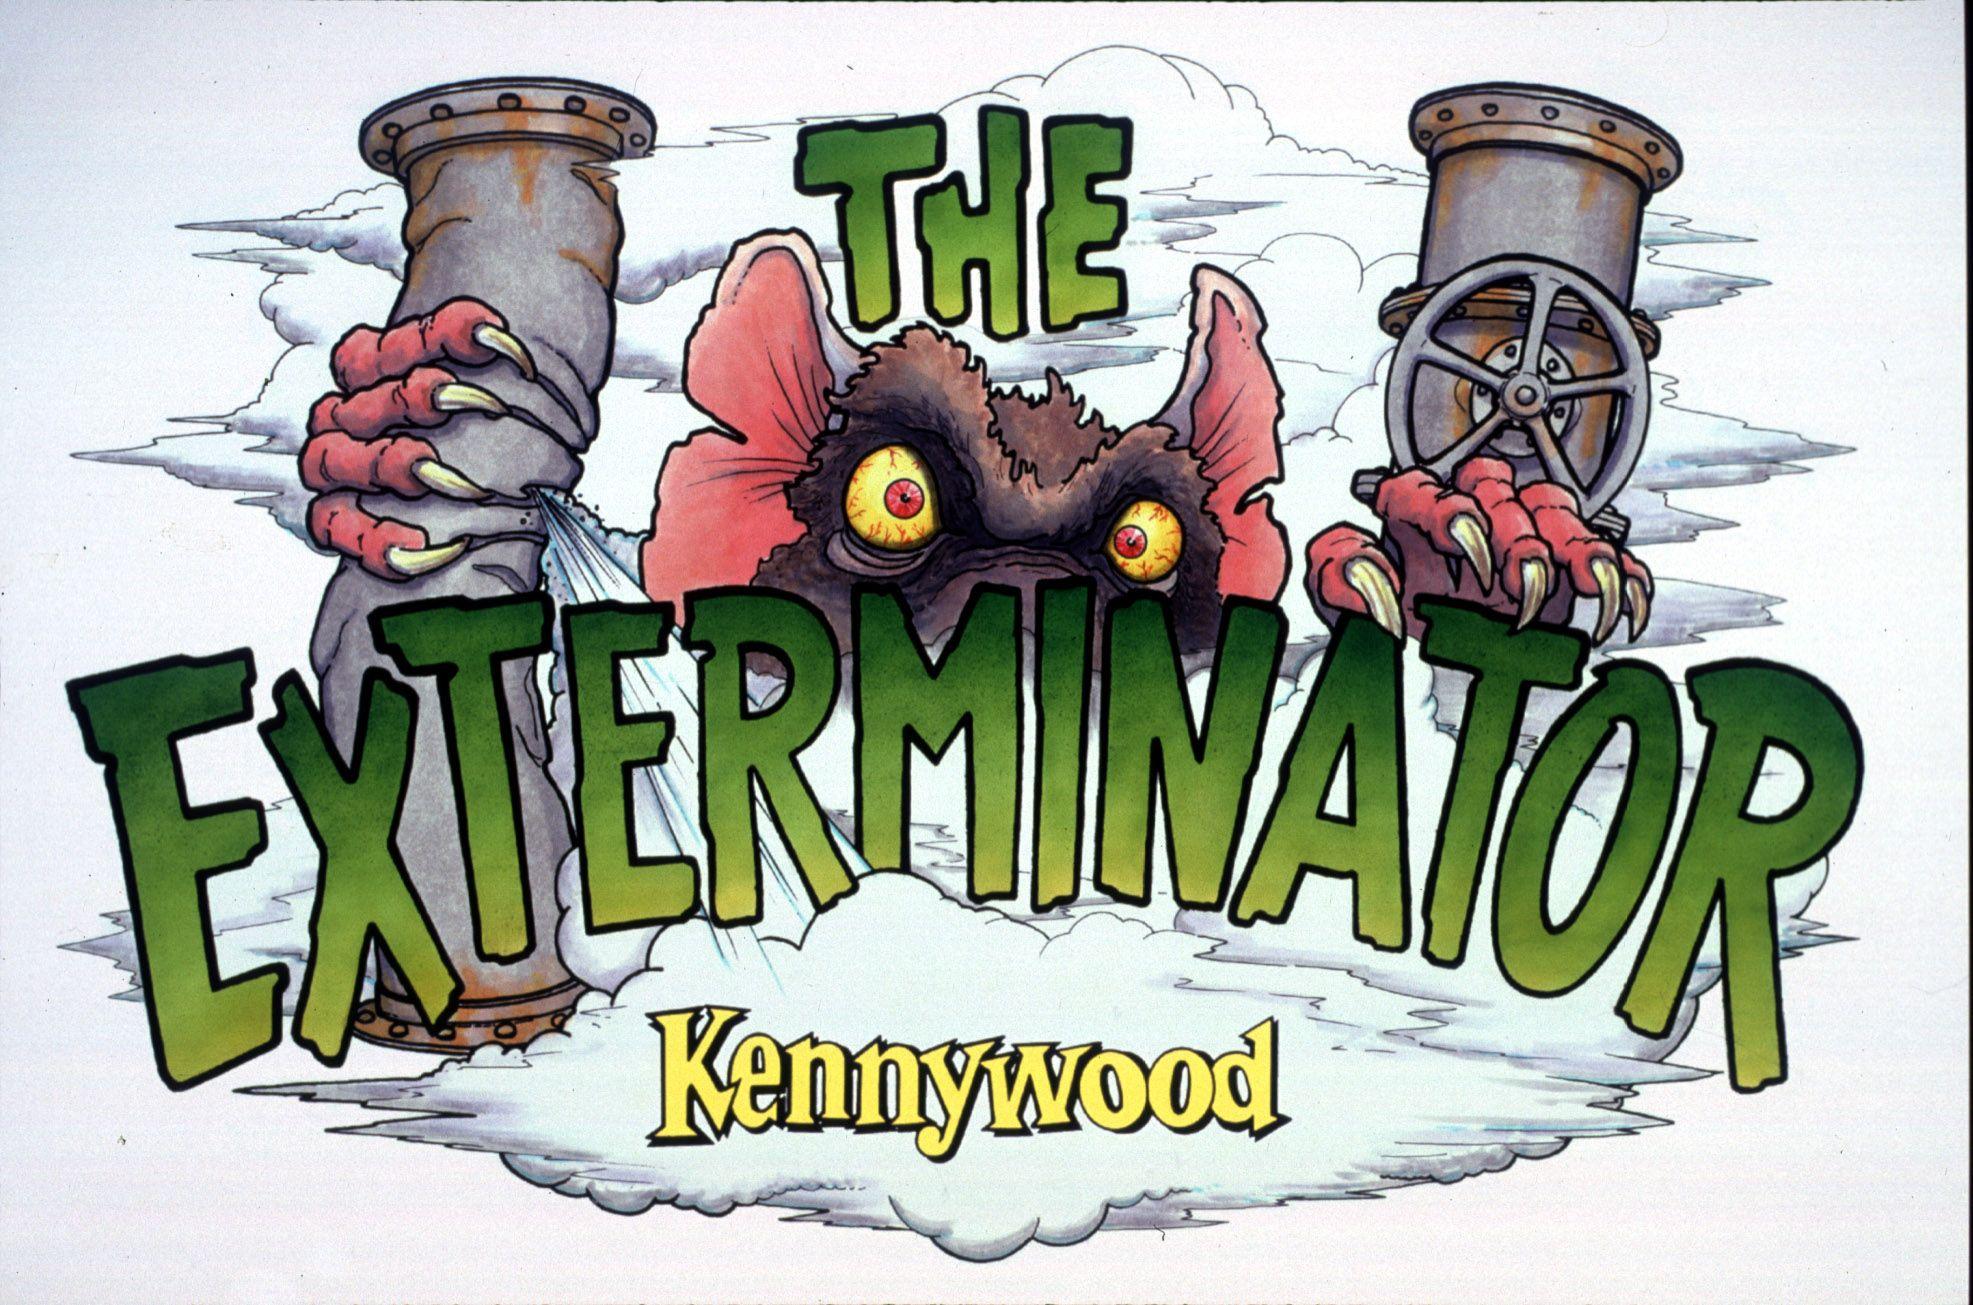 Kennywood Logo - Kenny Kangaroo to Share a Birthday Party with The Exterminator